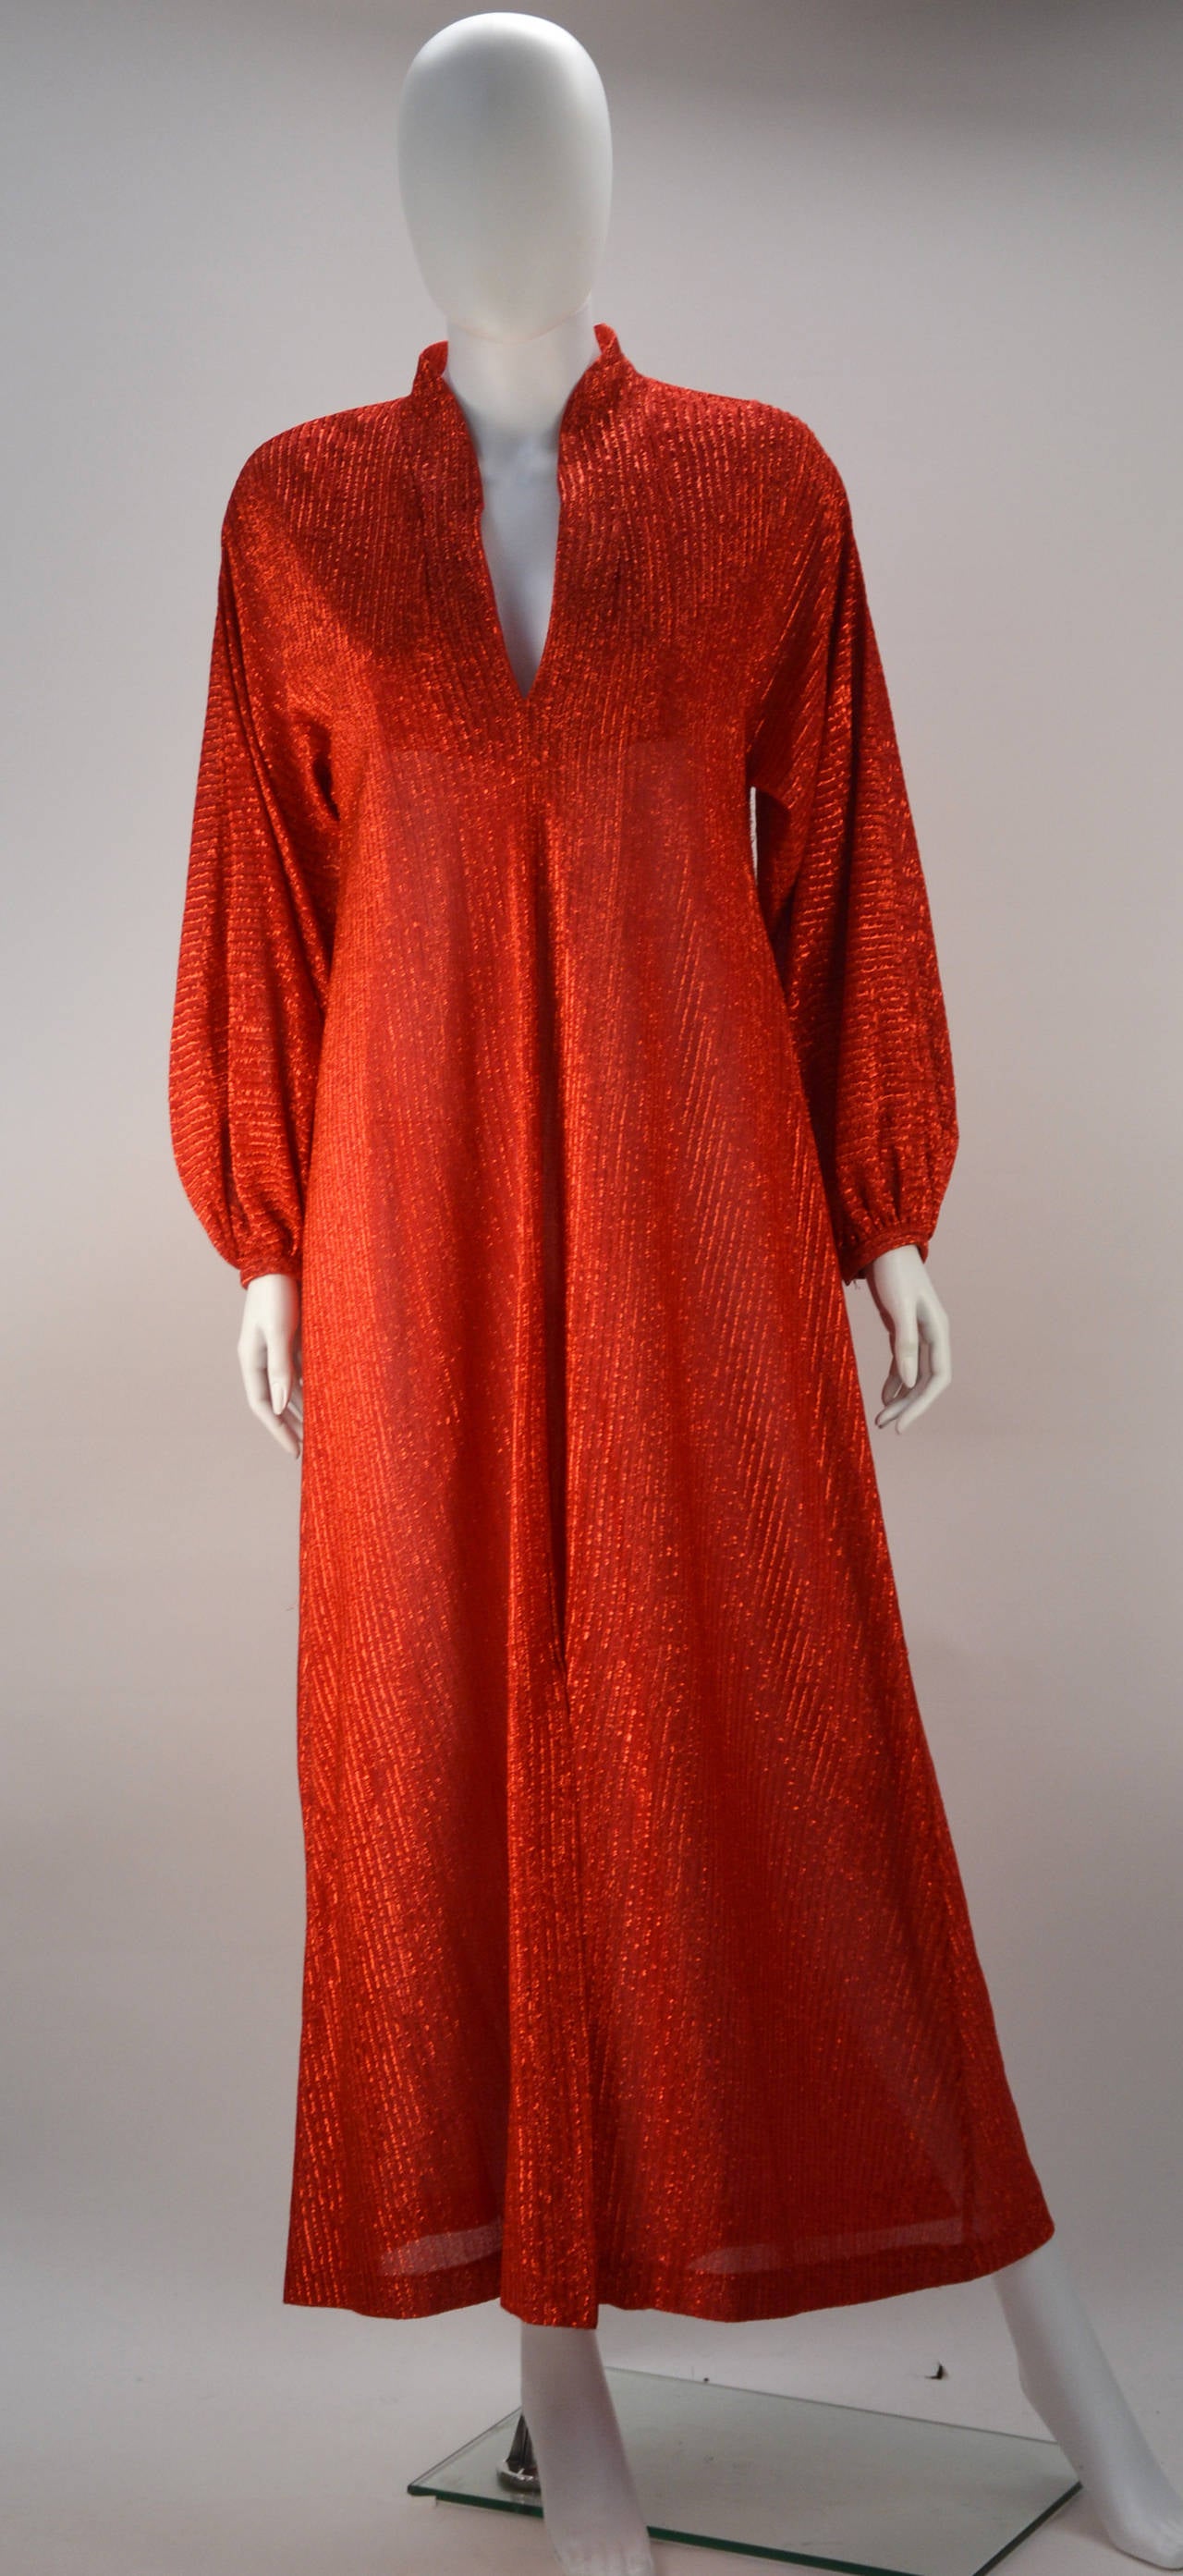 1970s Halston Red Metallic IV Dress For Sale at 1stdibs